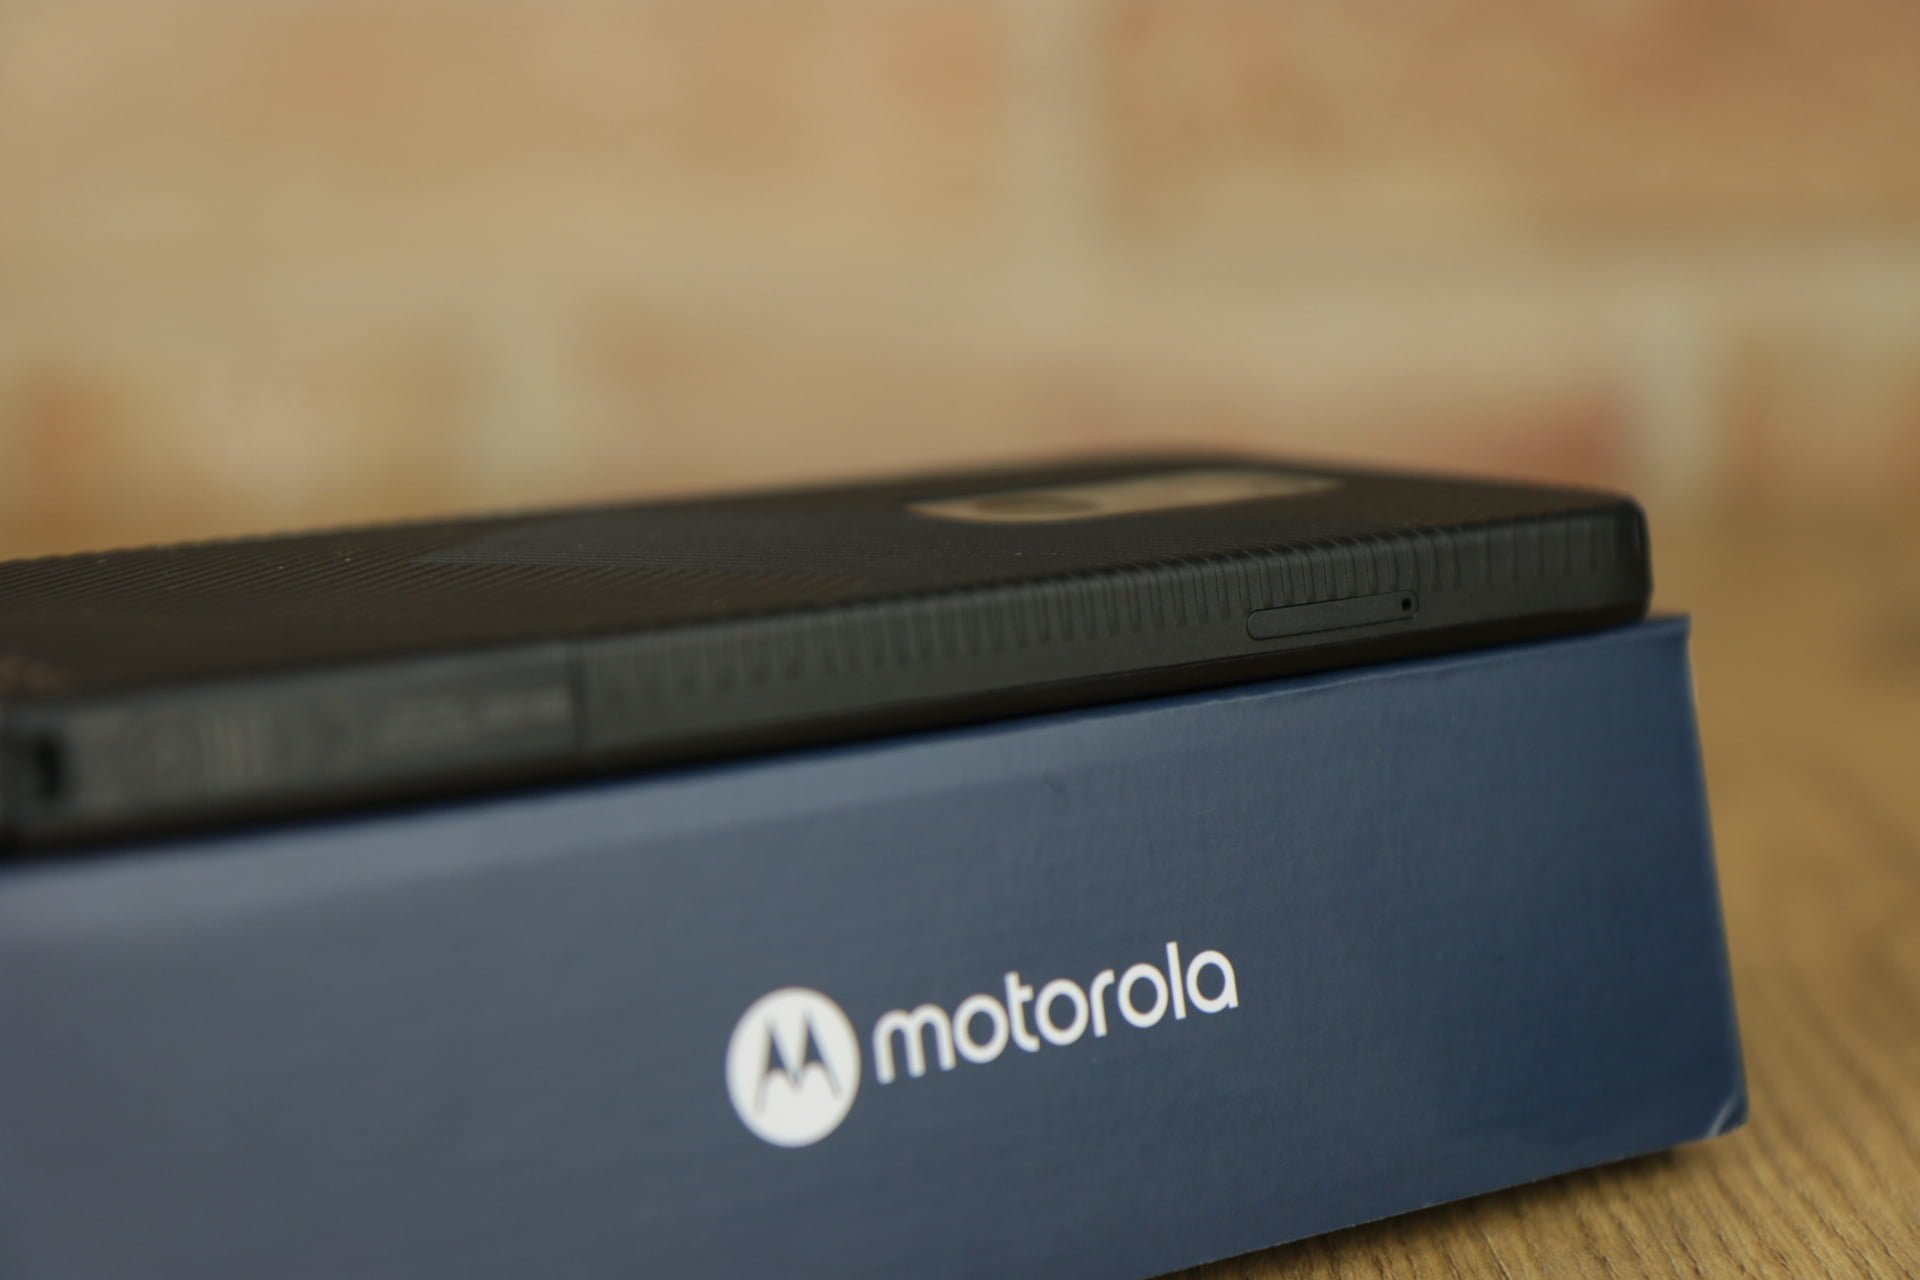 Motorola Defy 2021 recenzja test